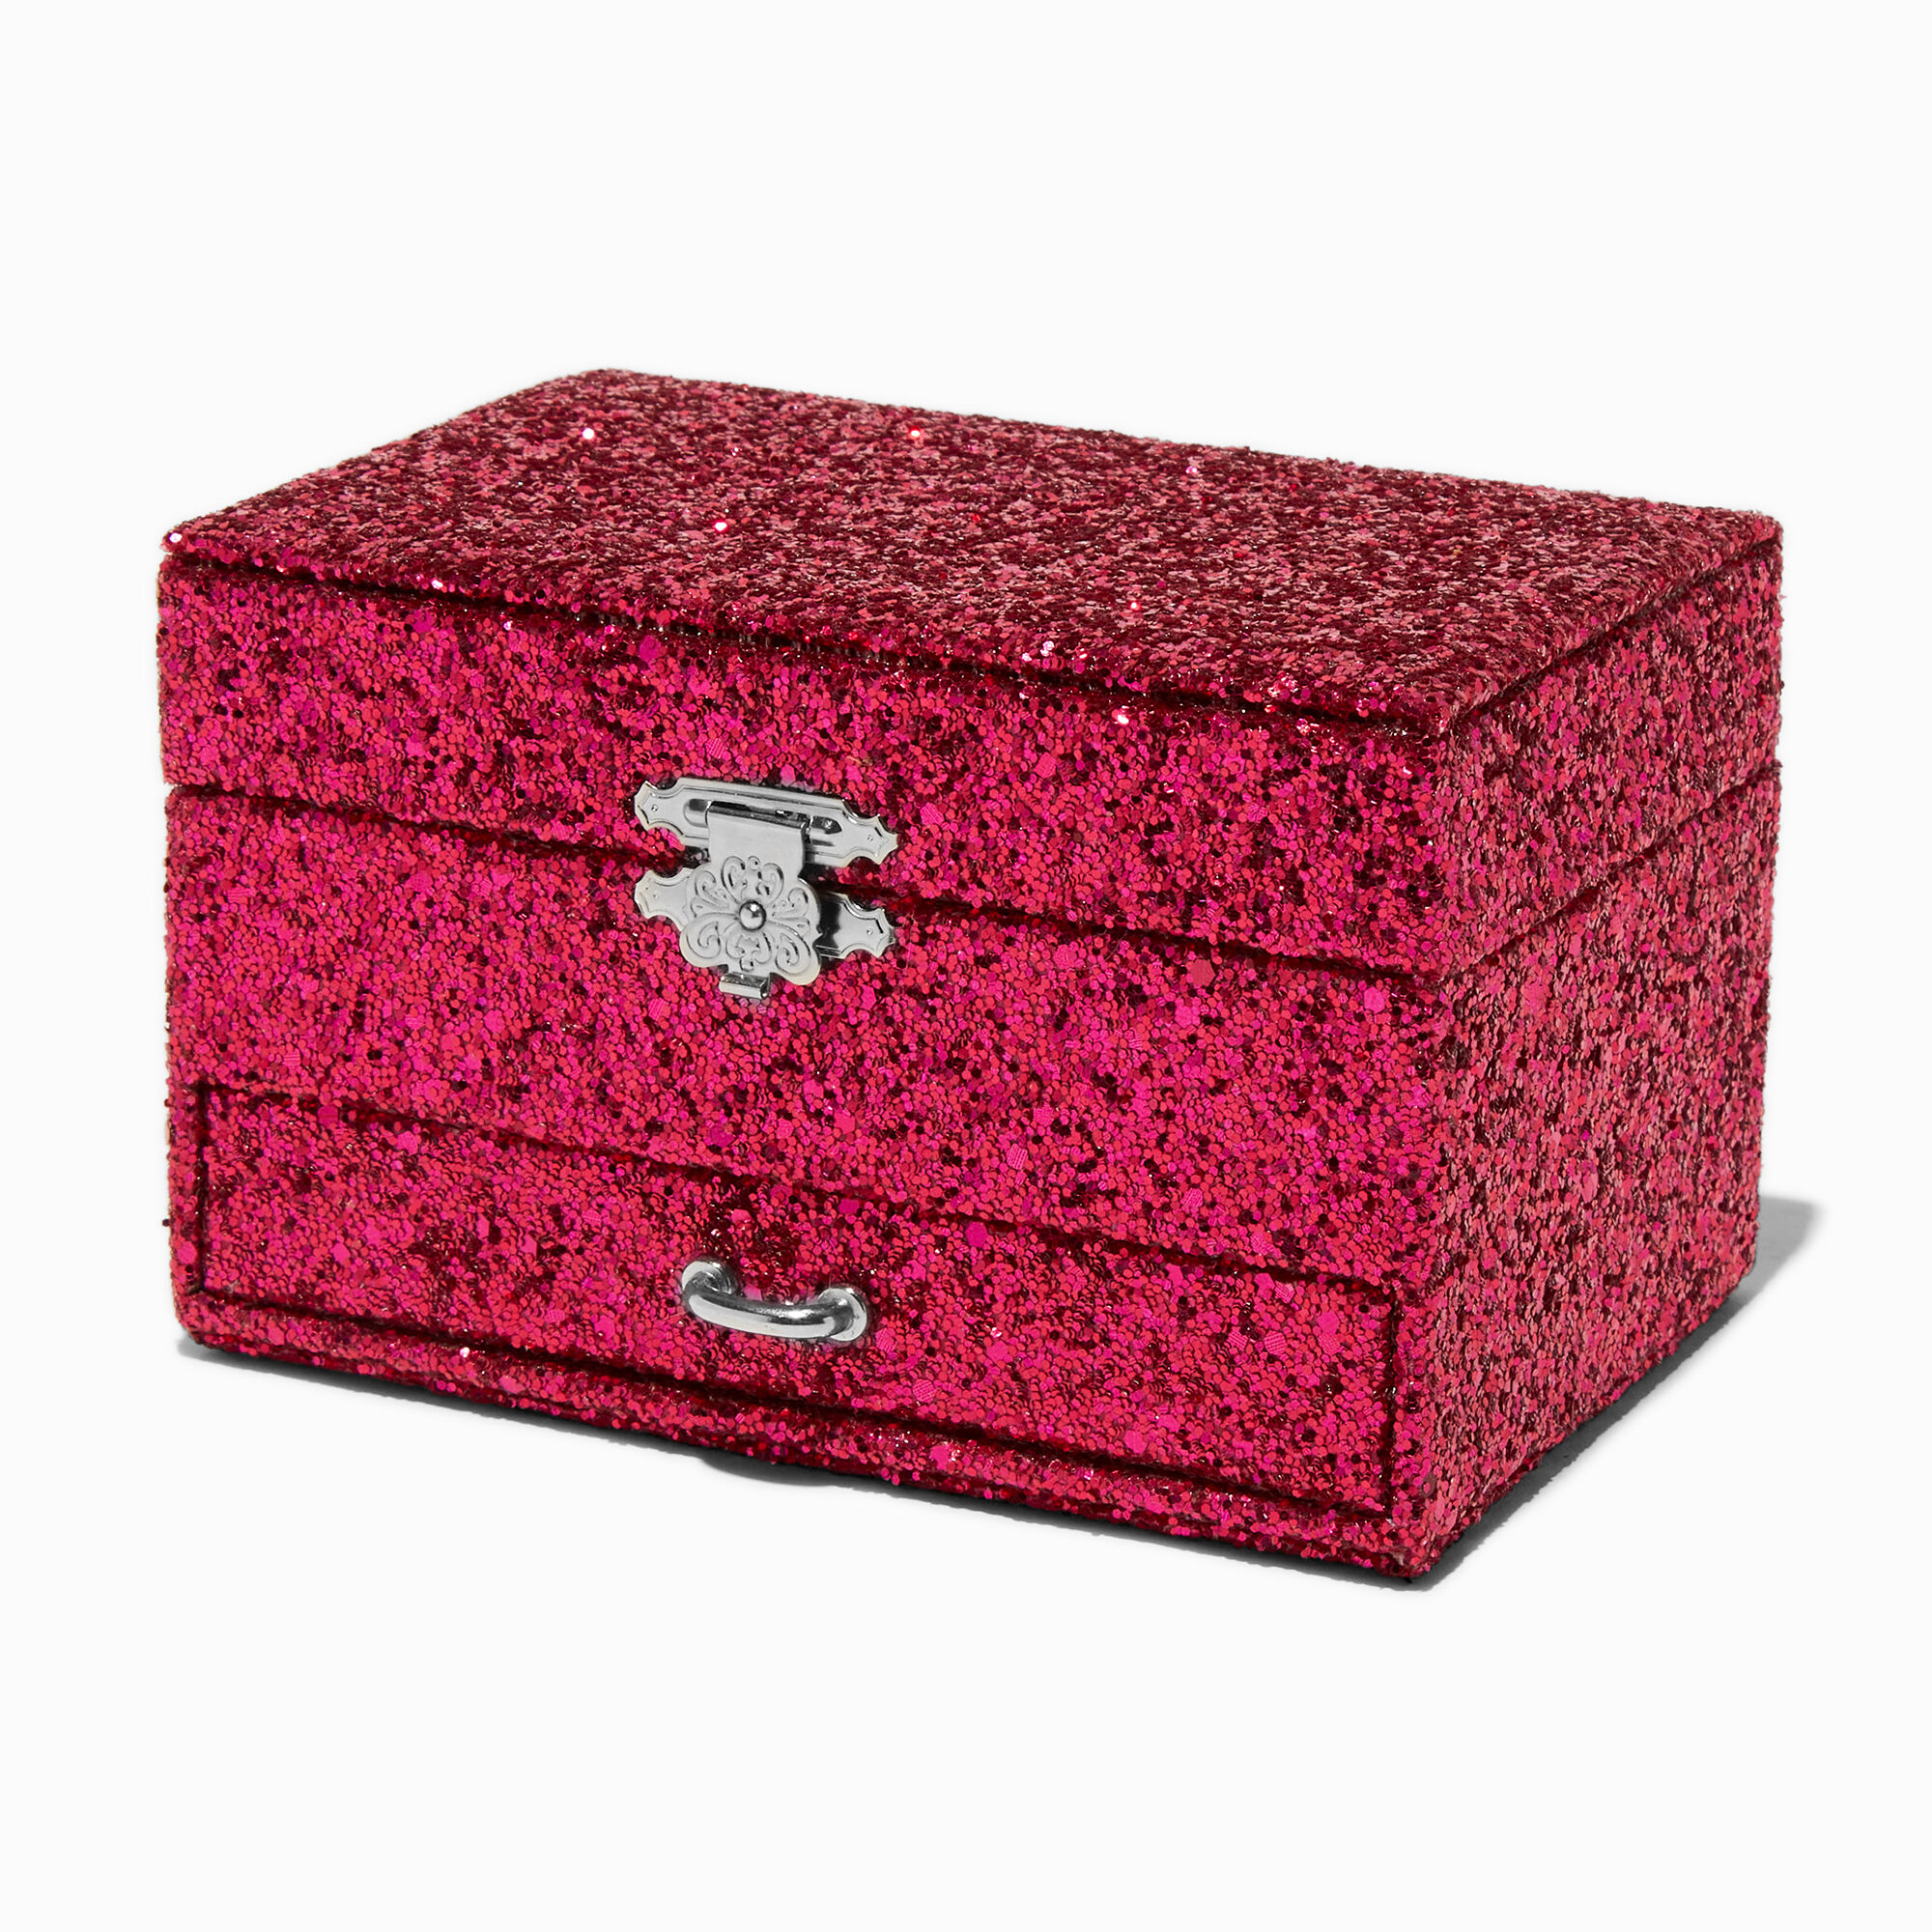 Pink Sparkle Sparkly Glitter Girly Girl Stuff Glam Jewelry Box